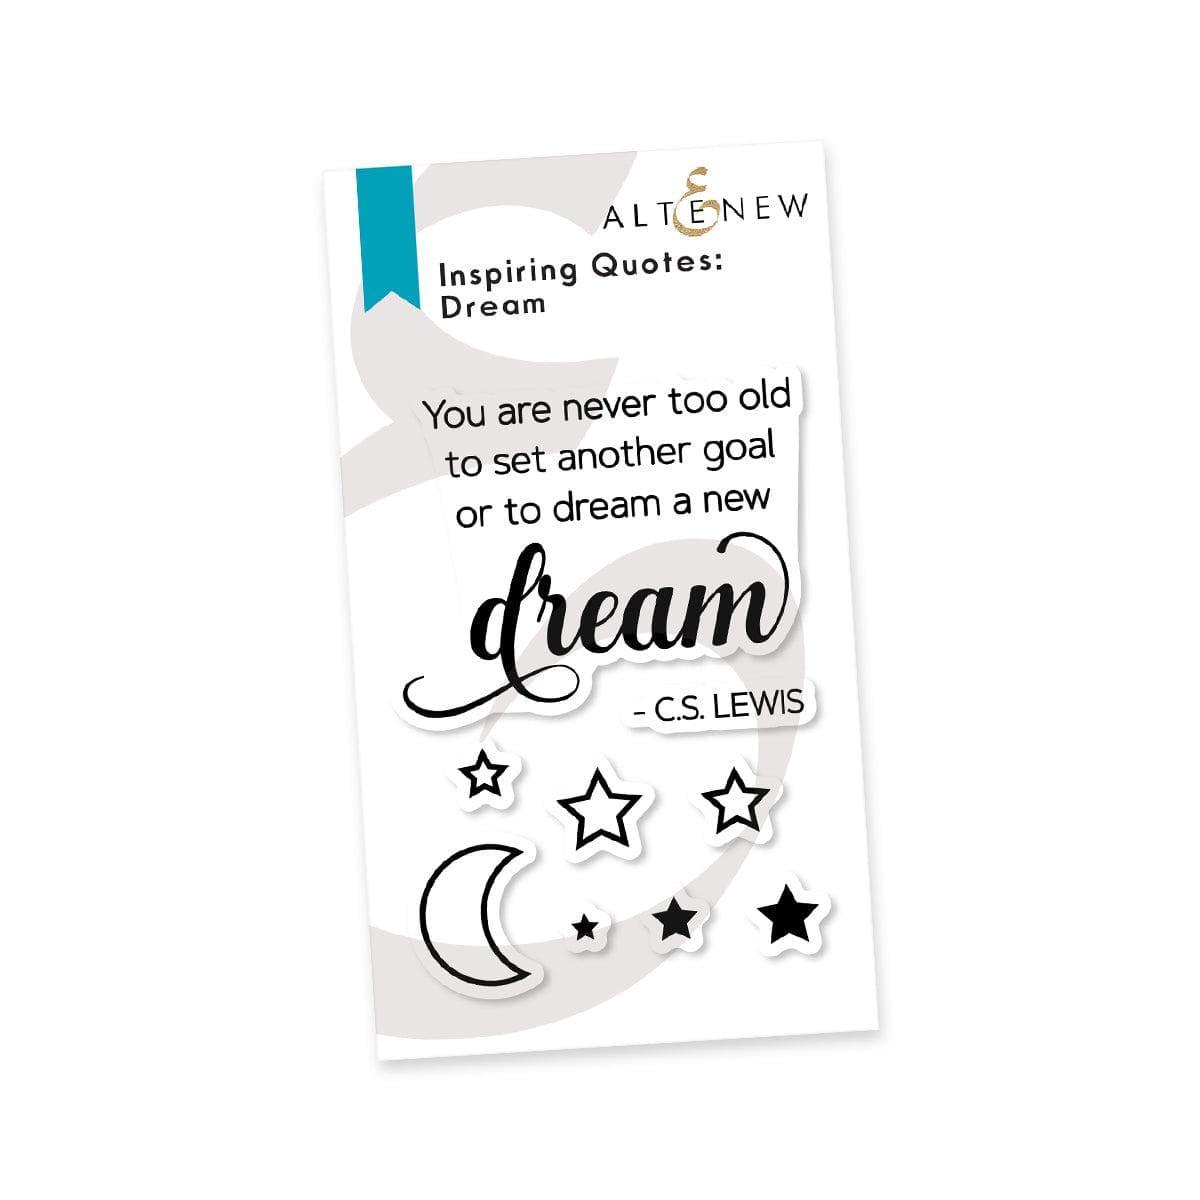 Altenew Stamp & Die Bundle Inspiring Quotes - Dream